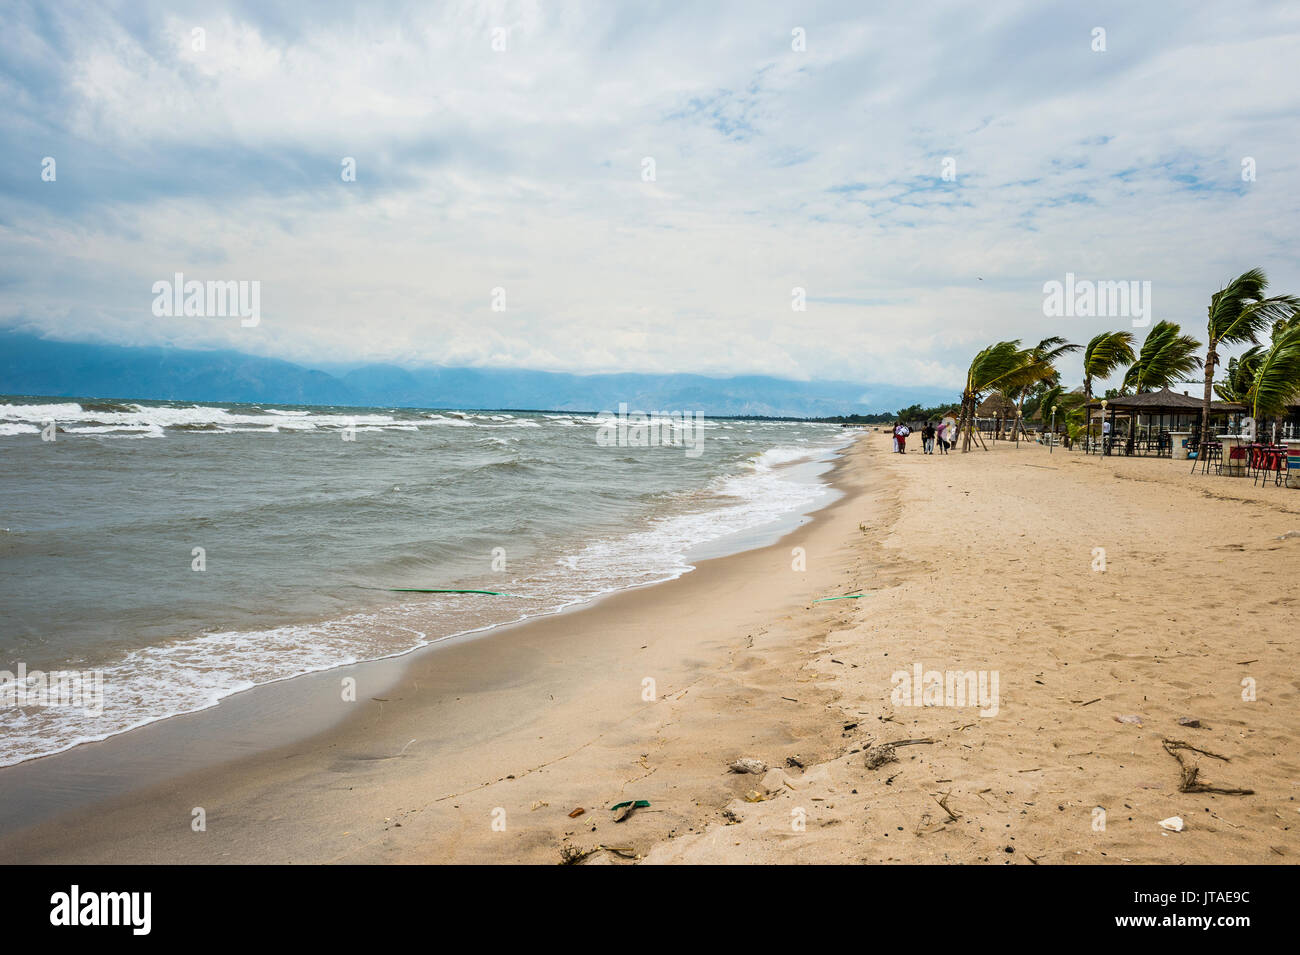 Spiaggia sulle rive del lago Tanganica, Bujumbura, Burundi, Africa Foto Stock